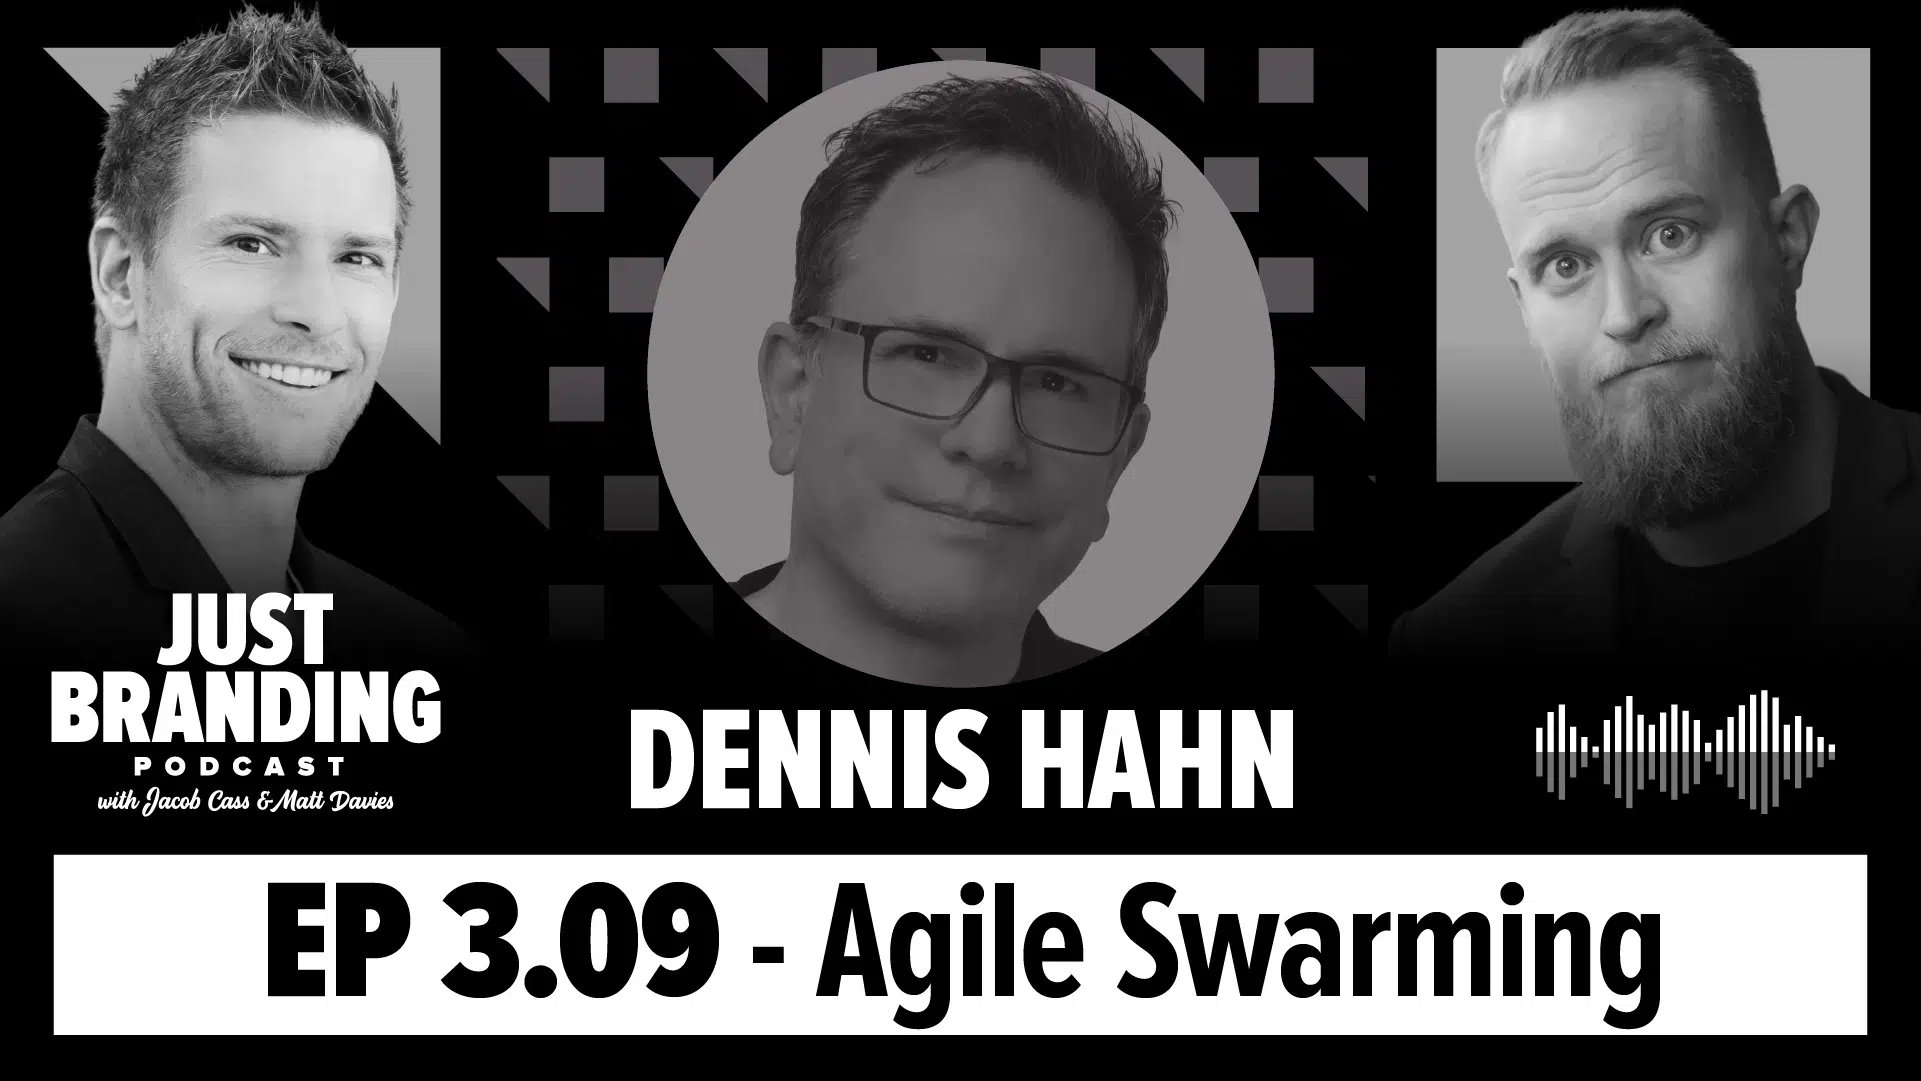 Agile Swarming with Dennis Hahn